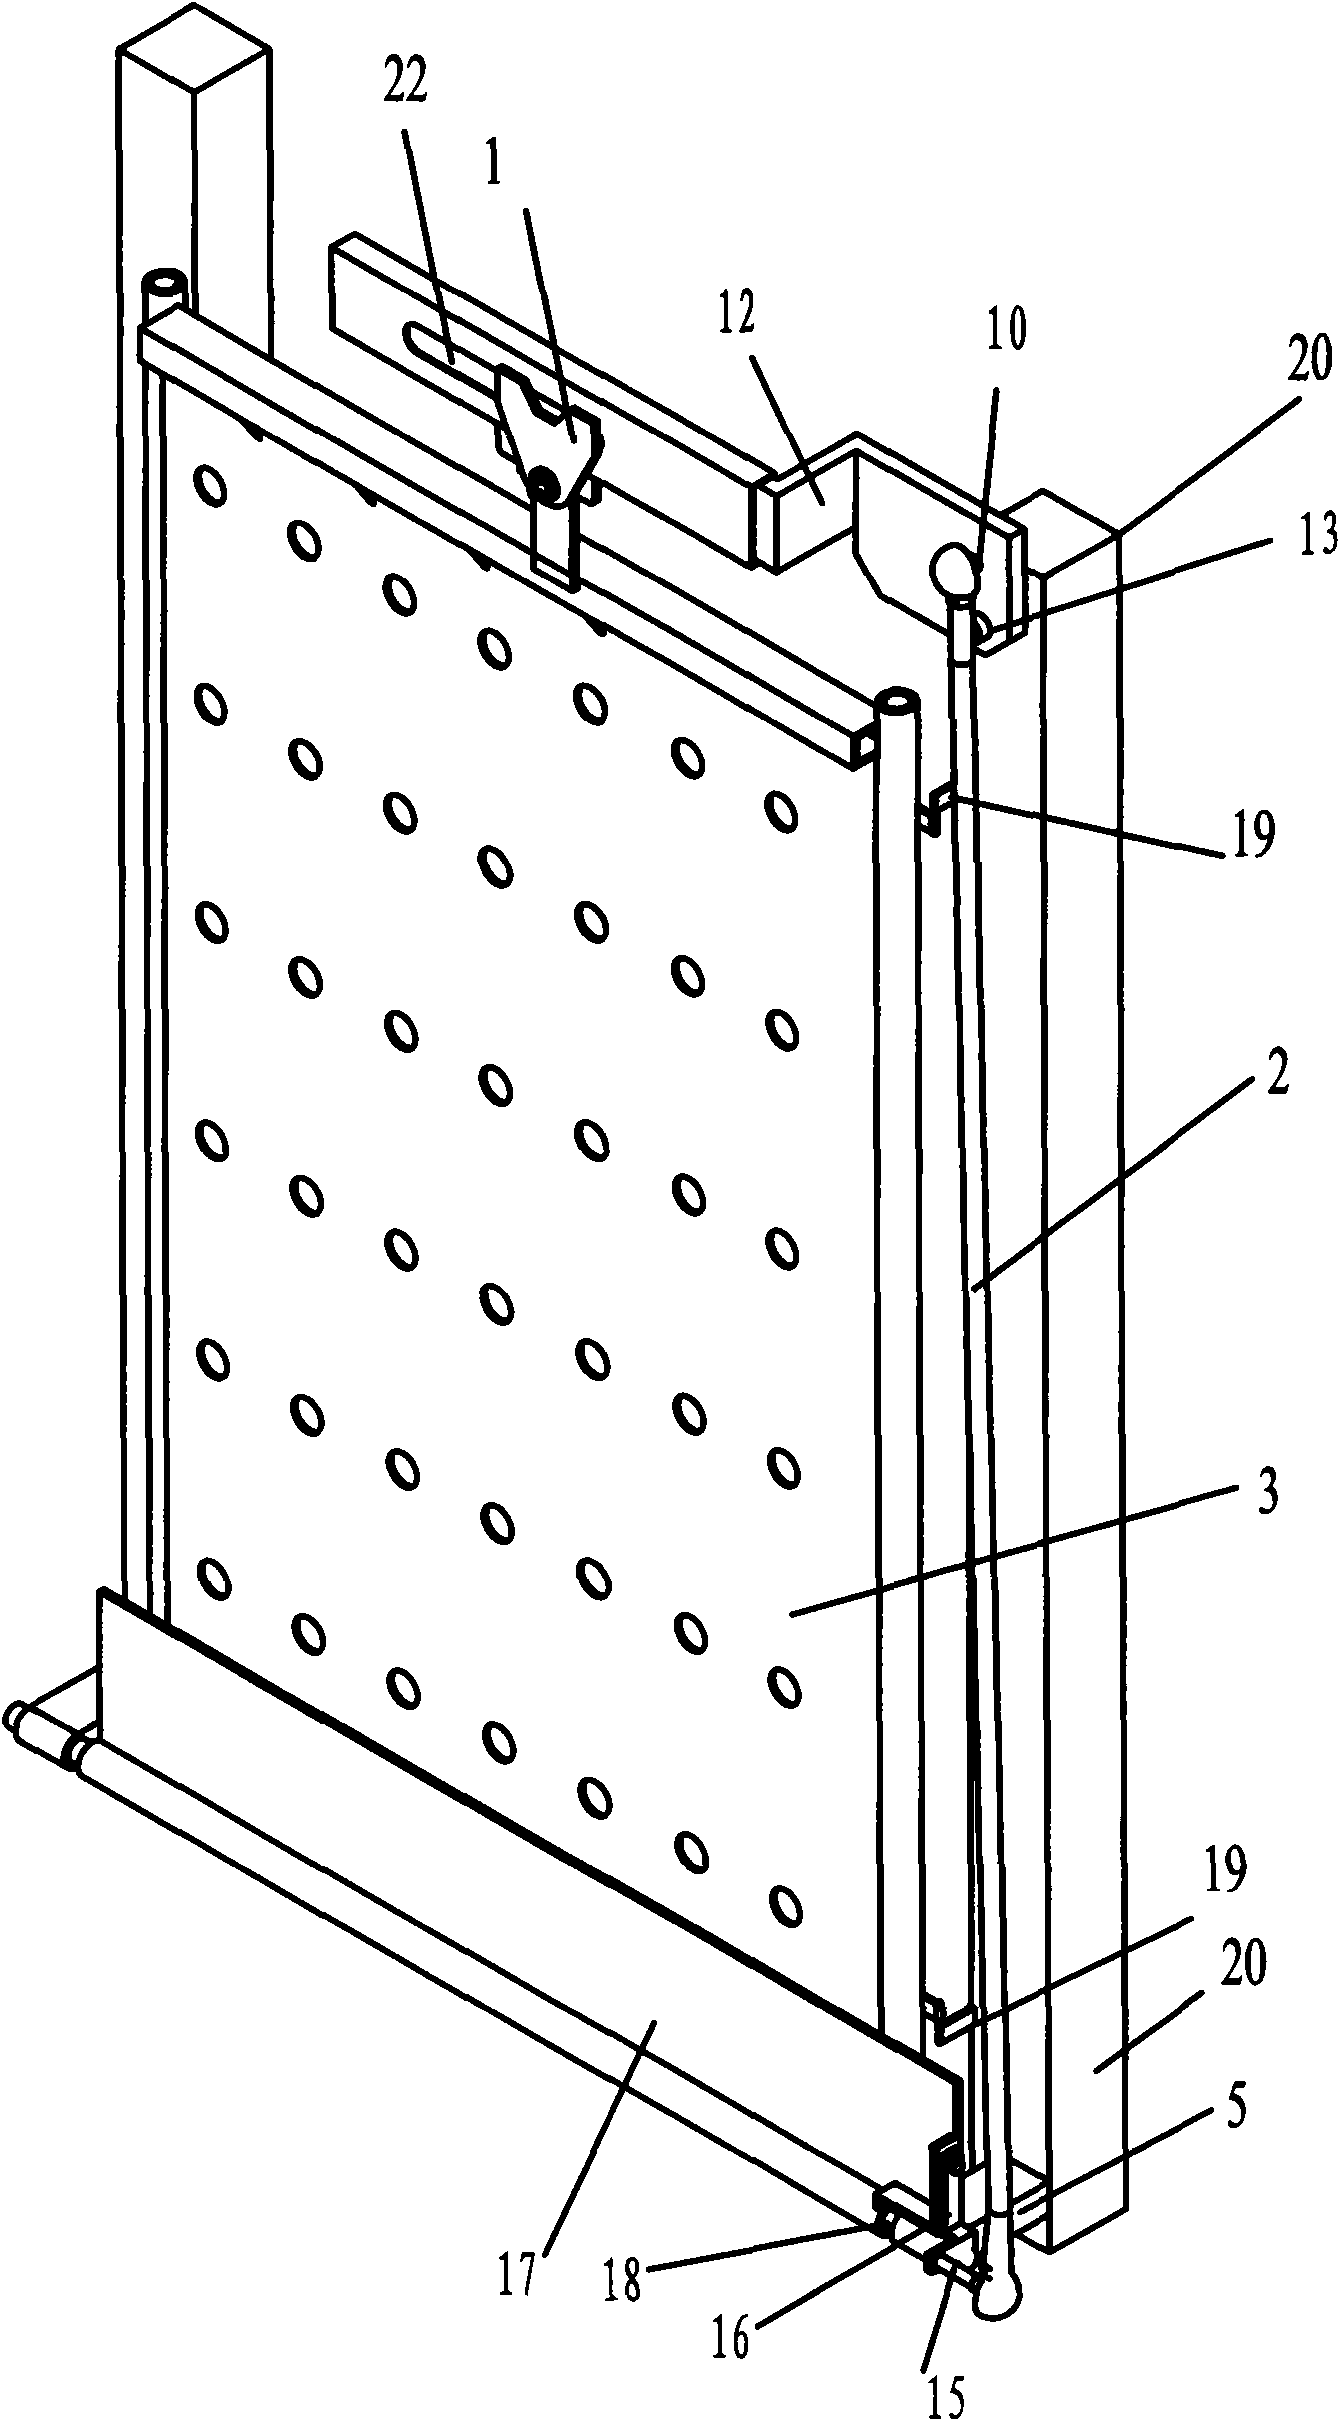 Lifter safety door